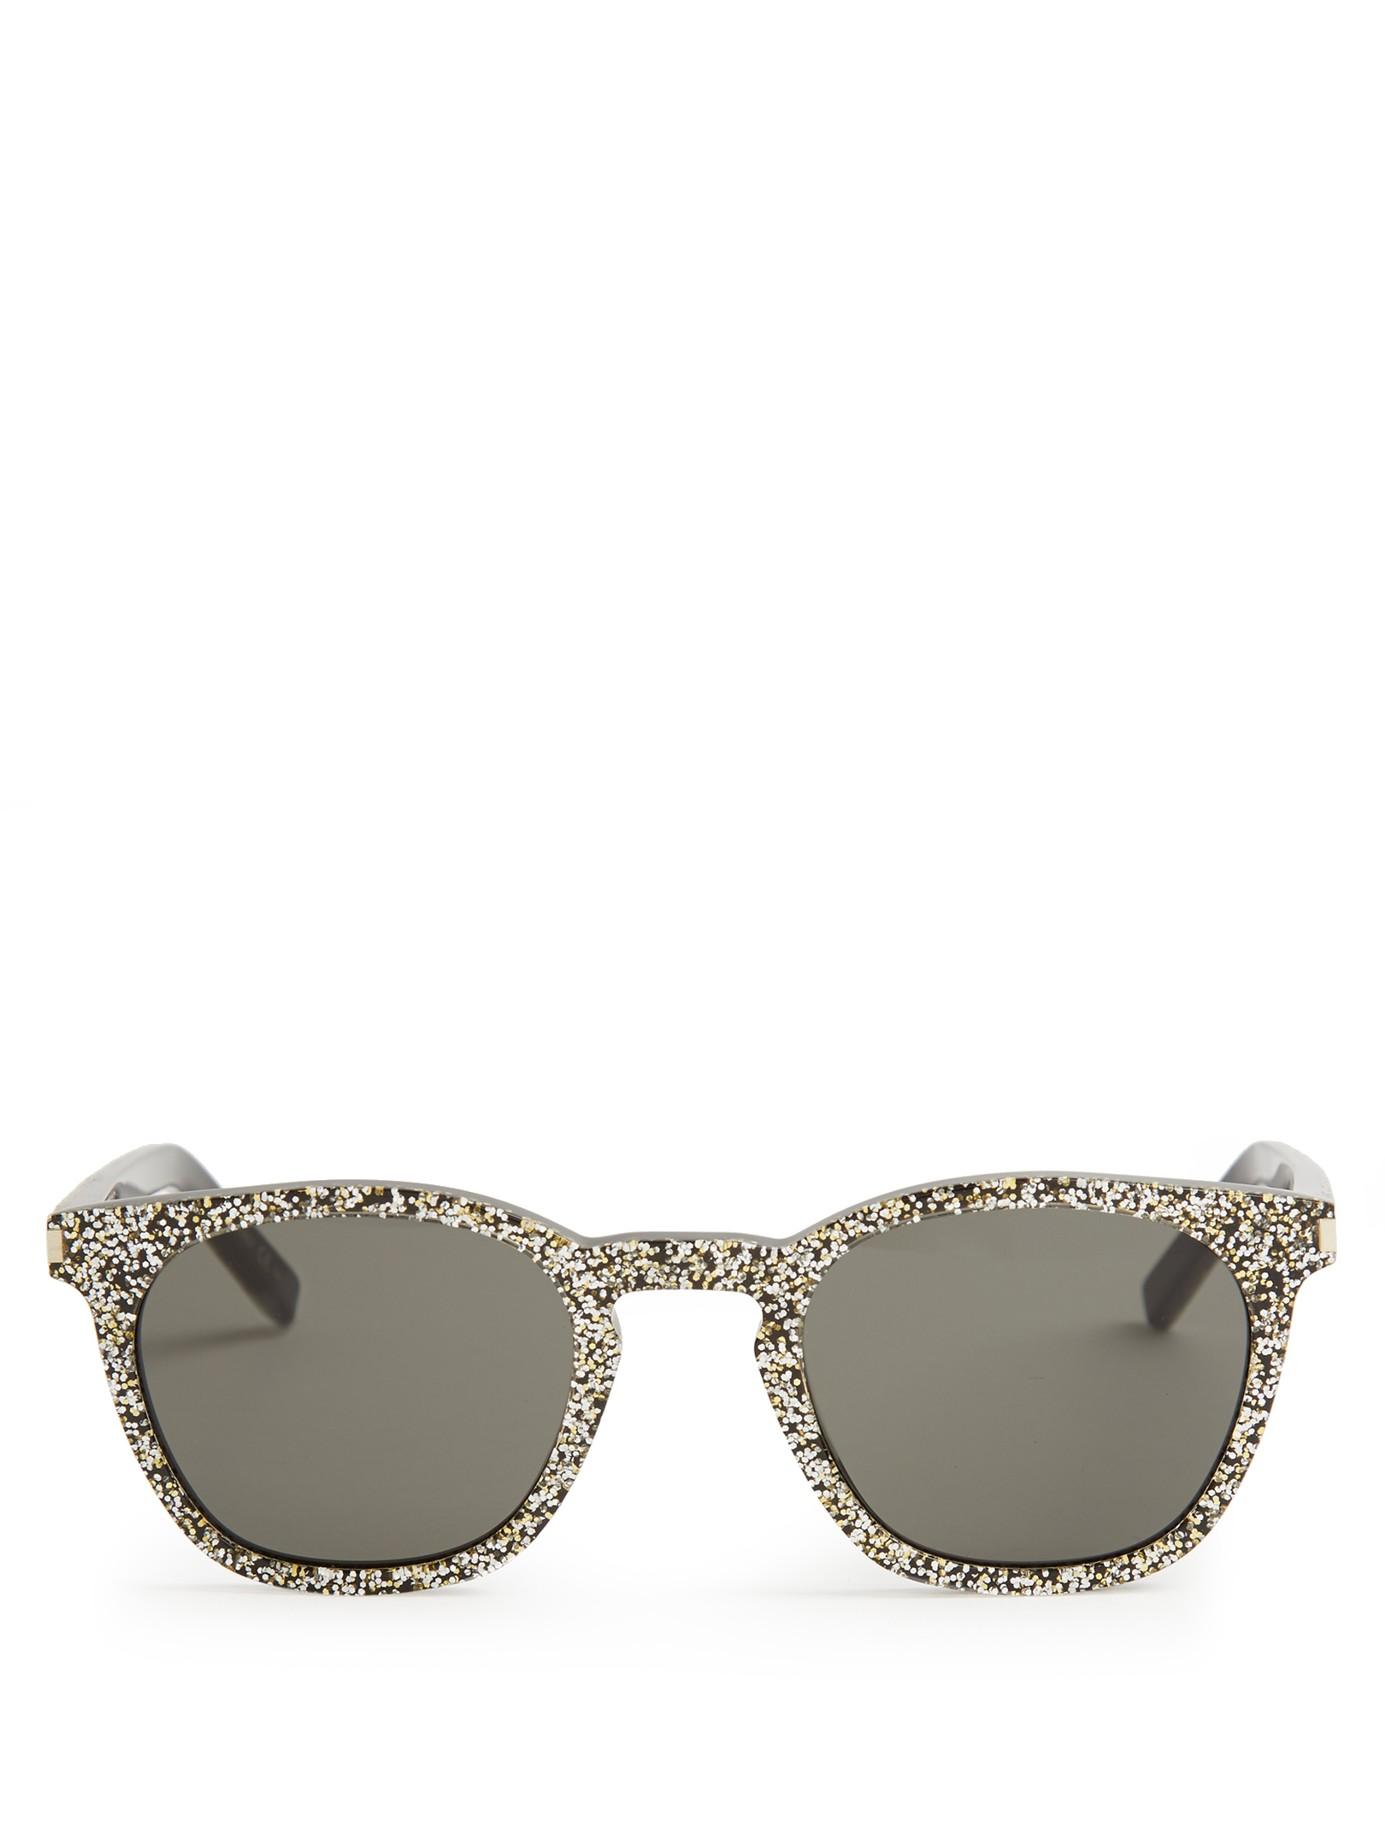 Saint Laurent D-frame Glitter Sunglasses in Silver (Metallic) - Lyst